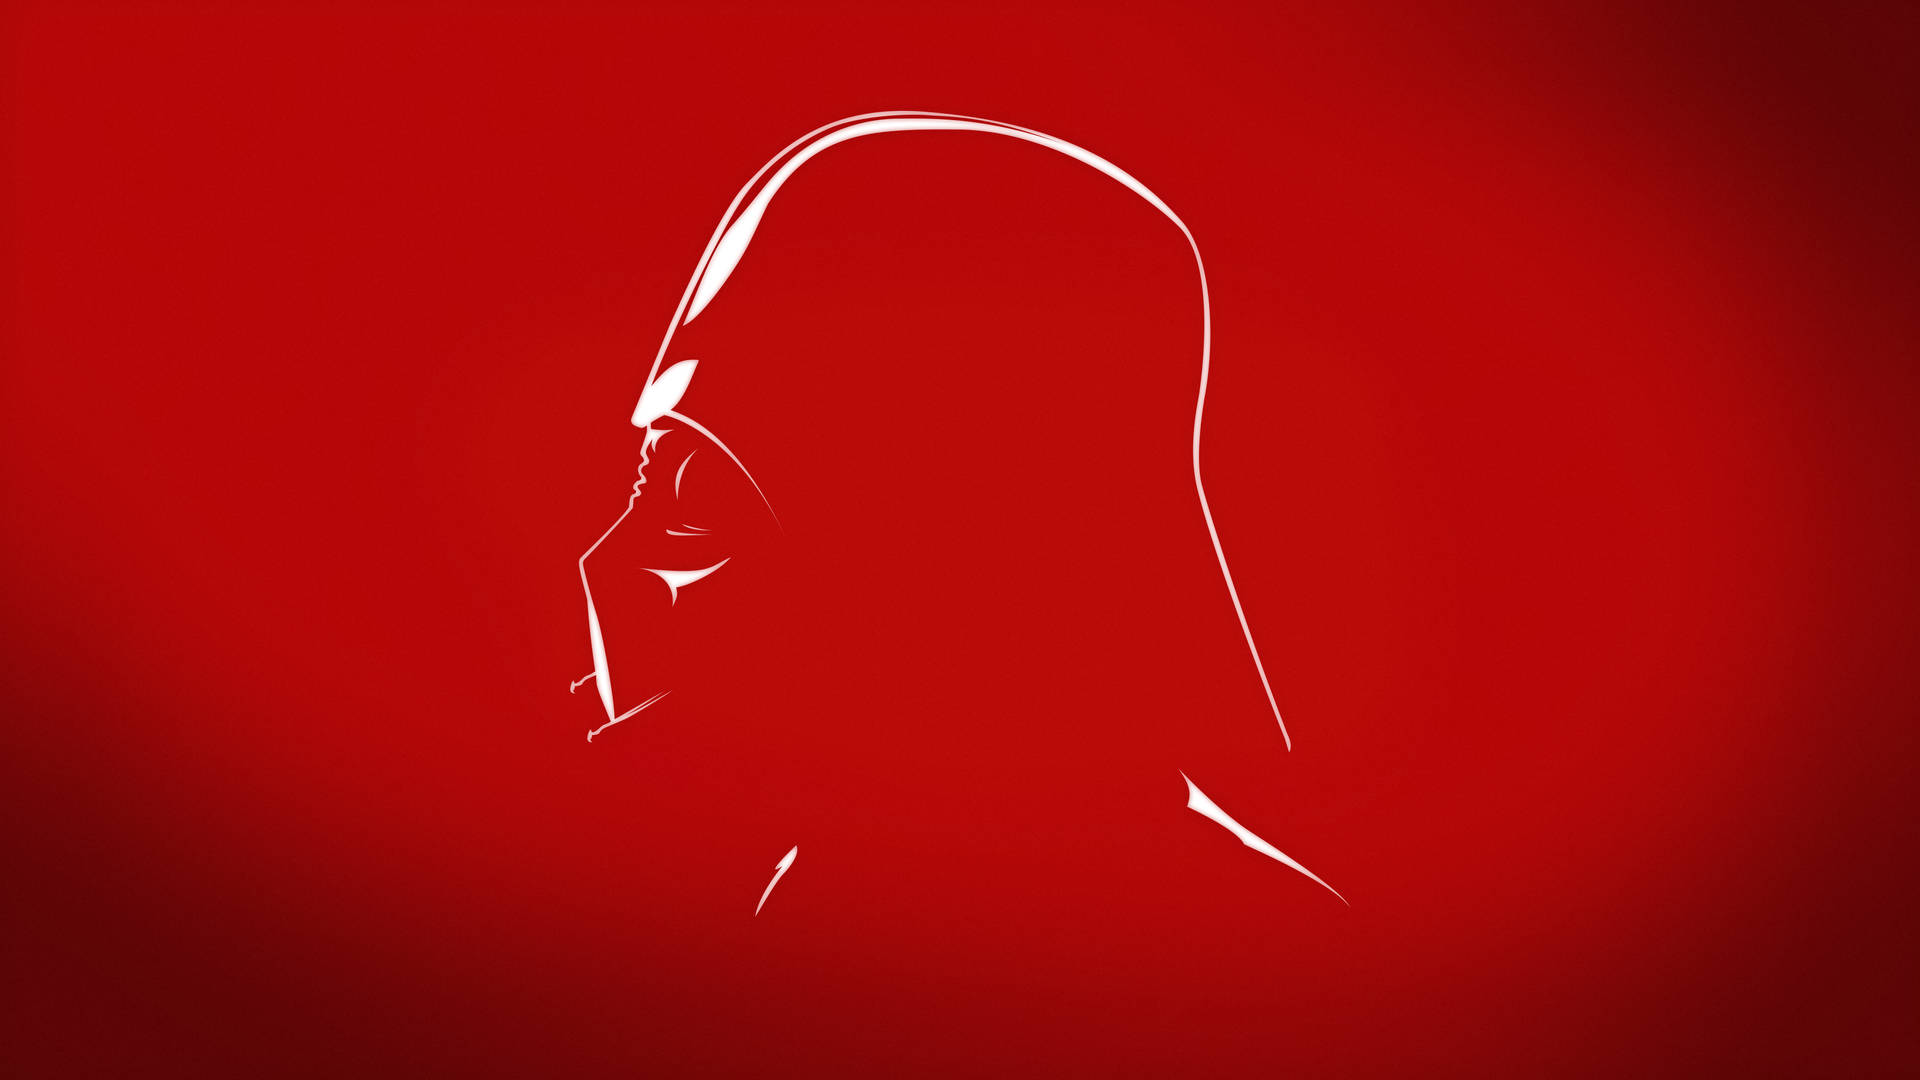 Darth Vader 4k Silhouette Background